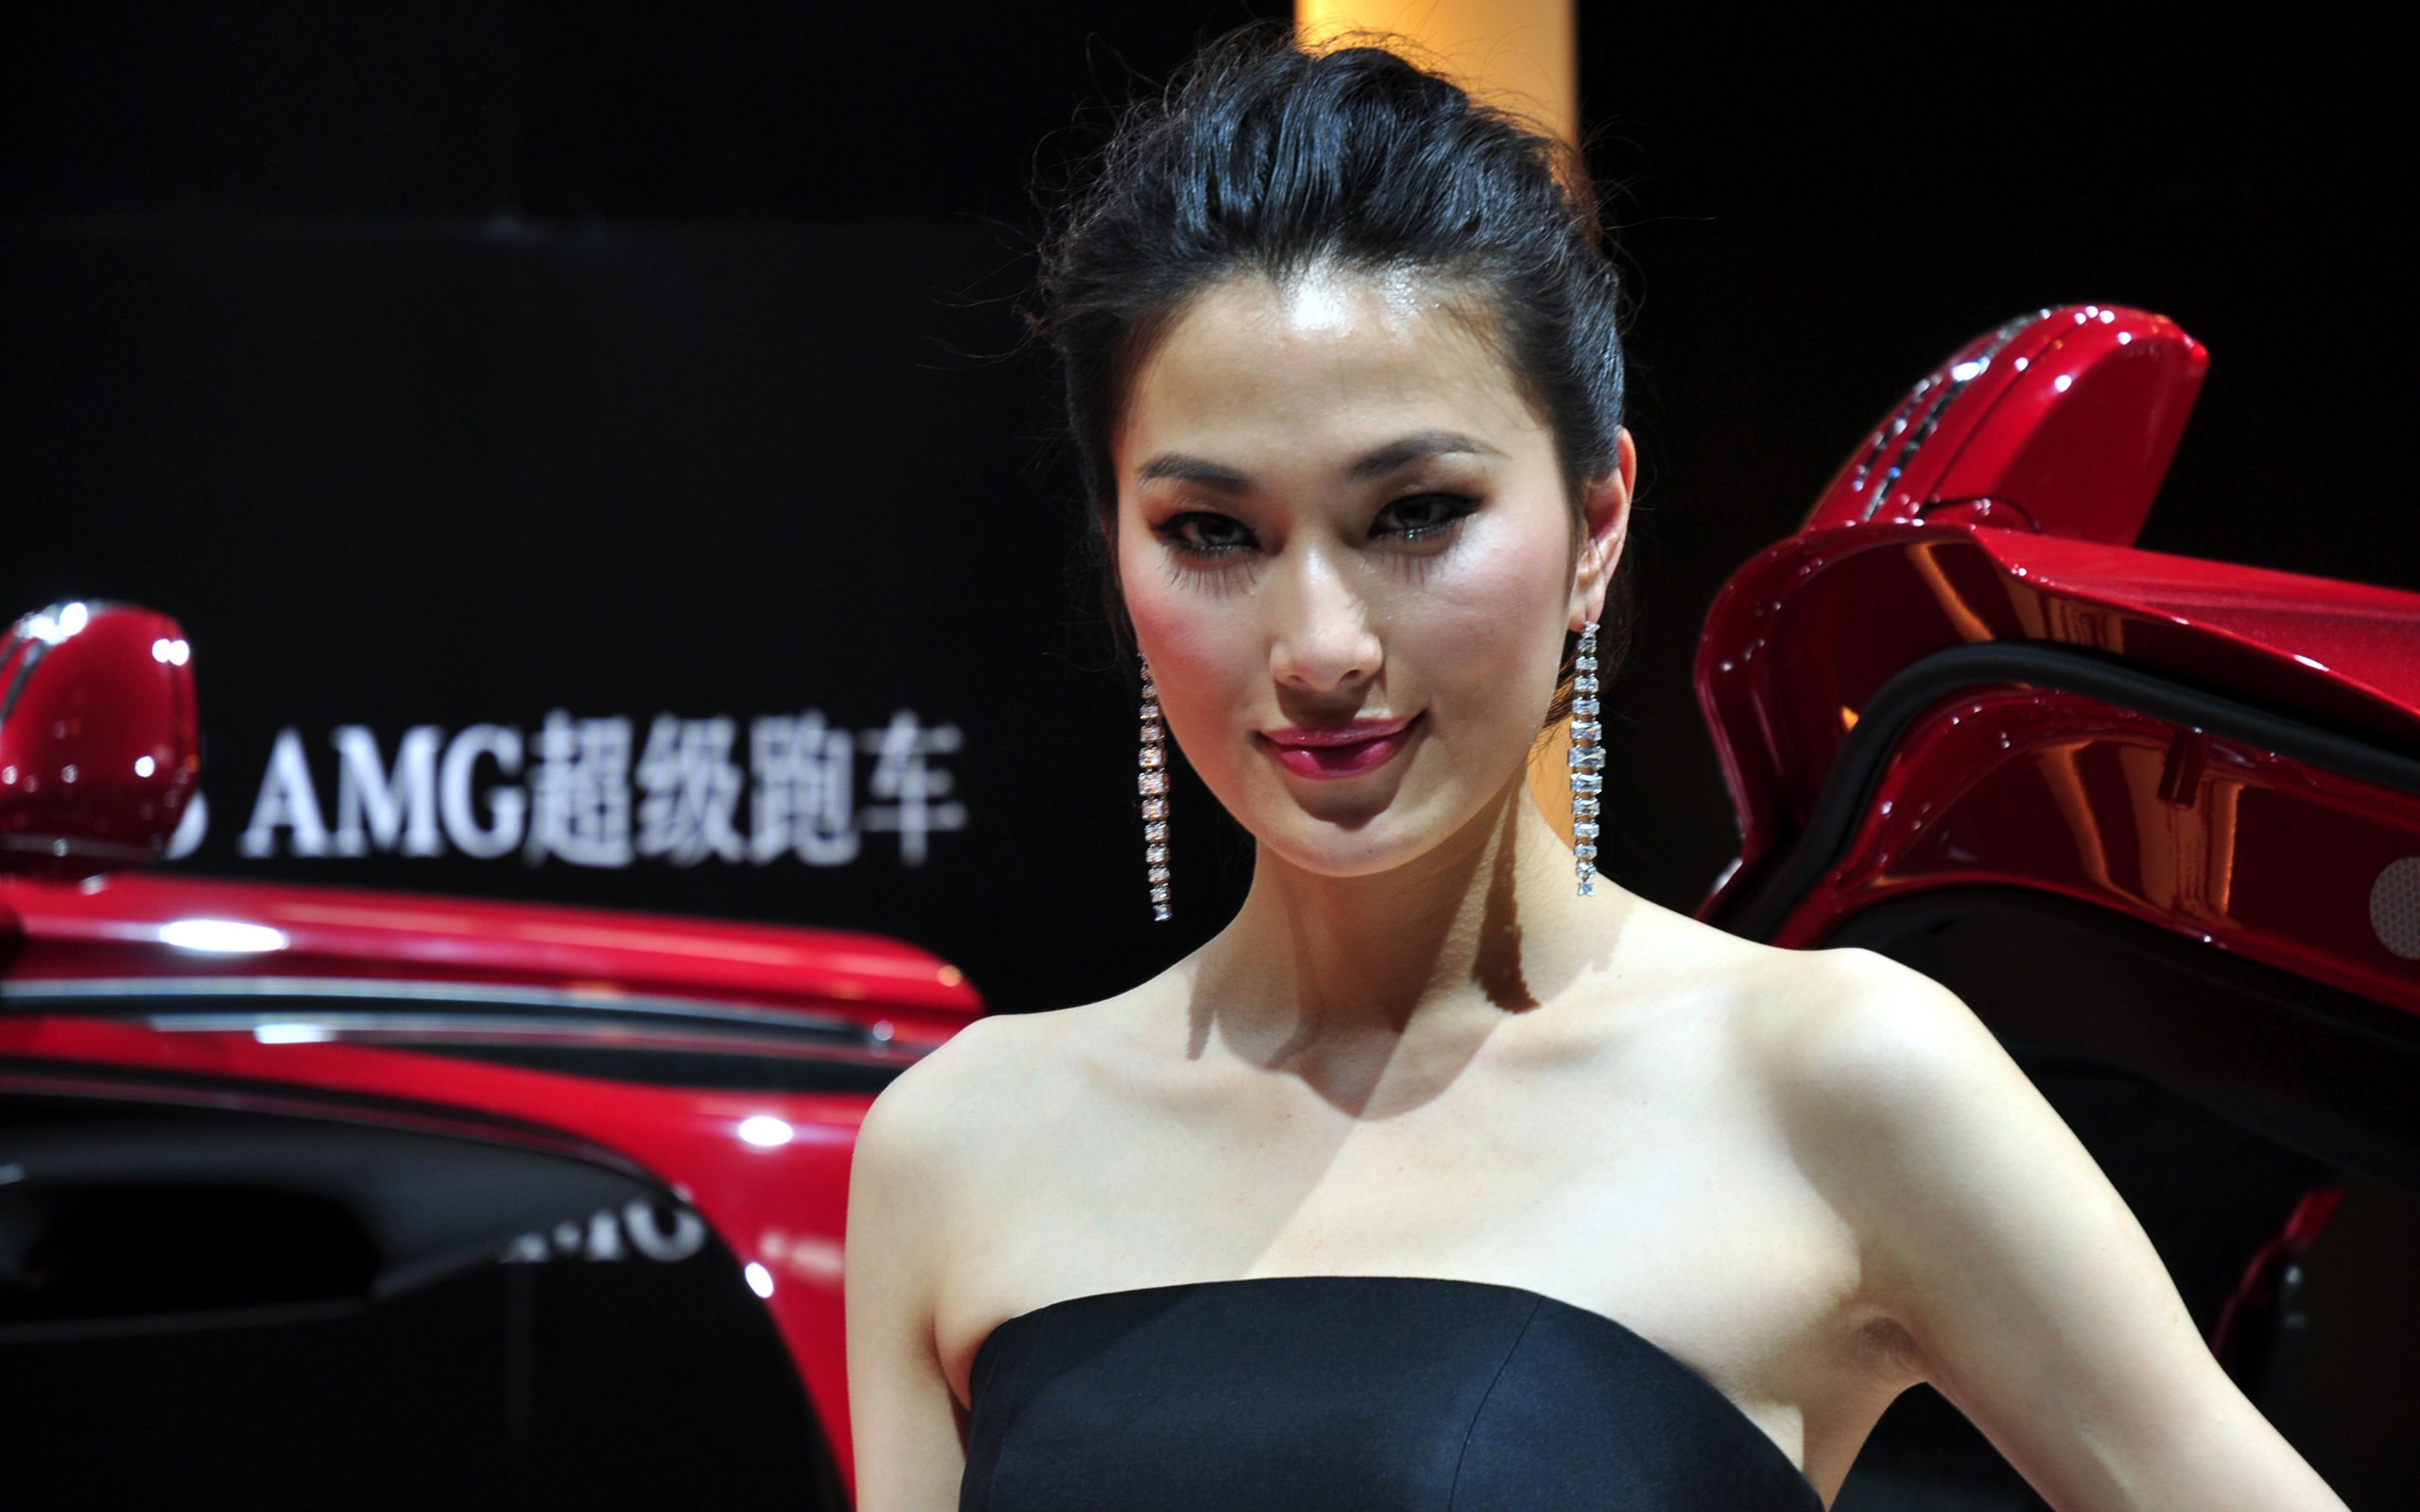 2010 Peking autosalonu modely aut odběrem (1) #2 - 2560x1600